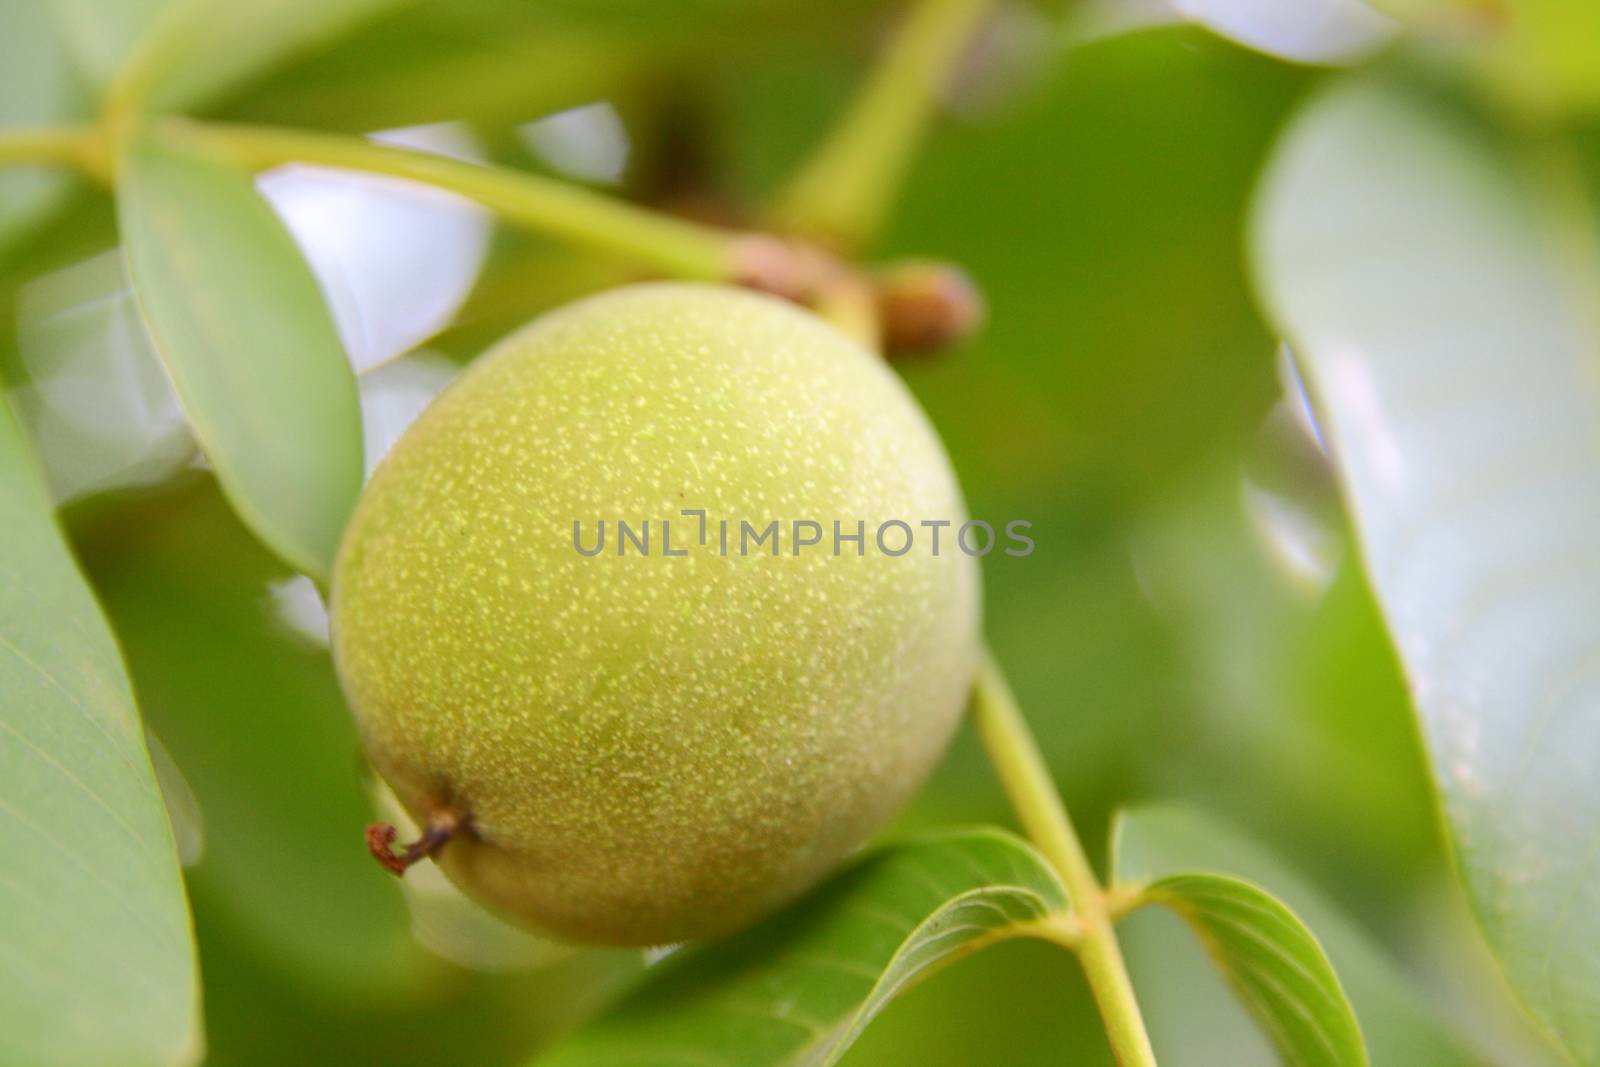 green walnut on tree for healthy nutrition